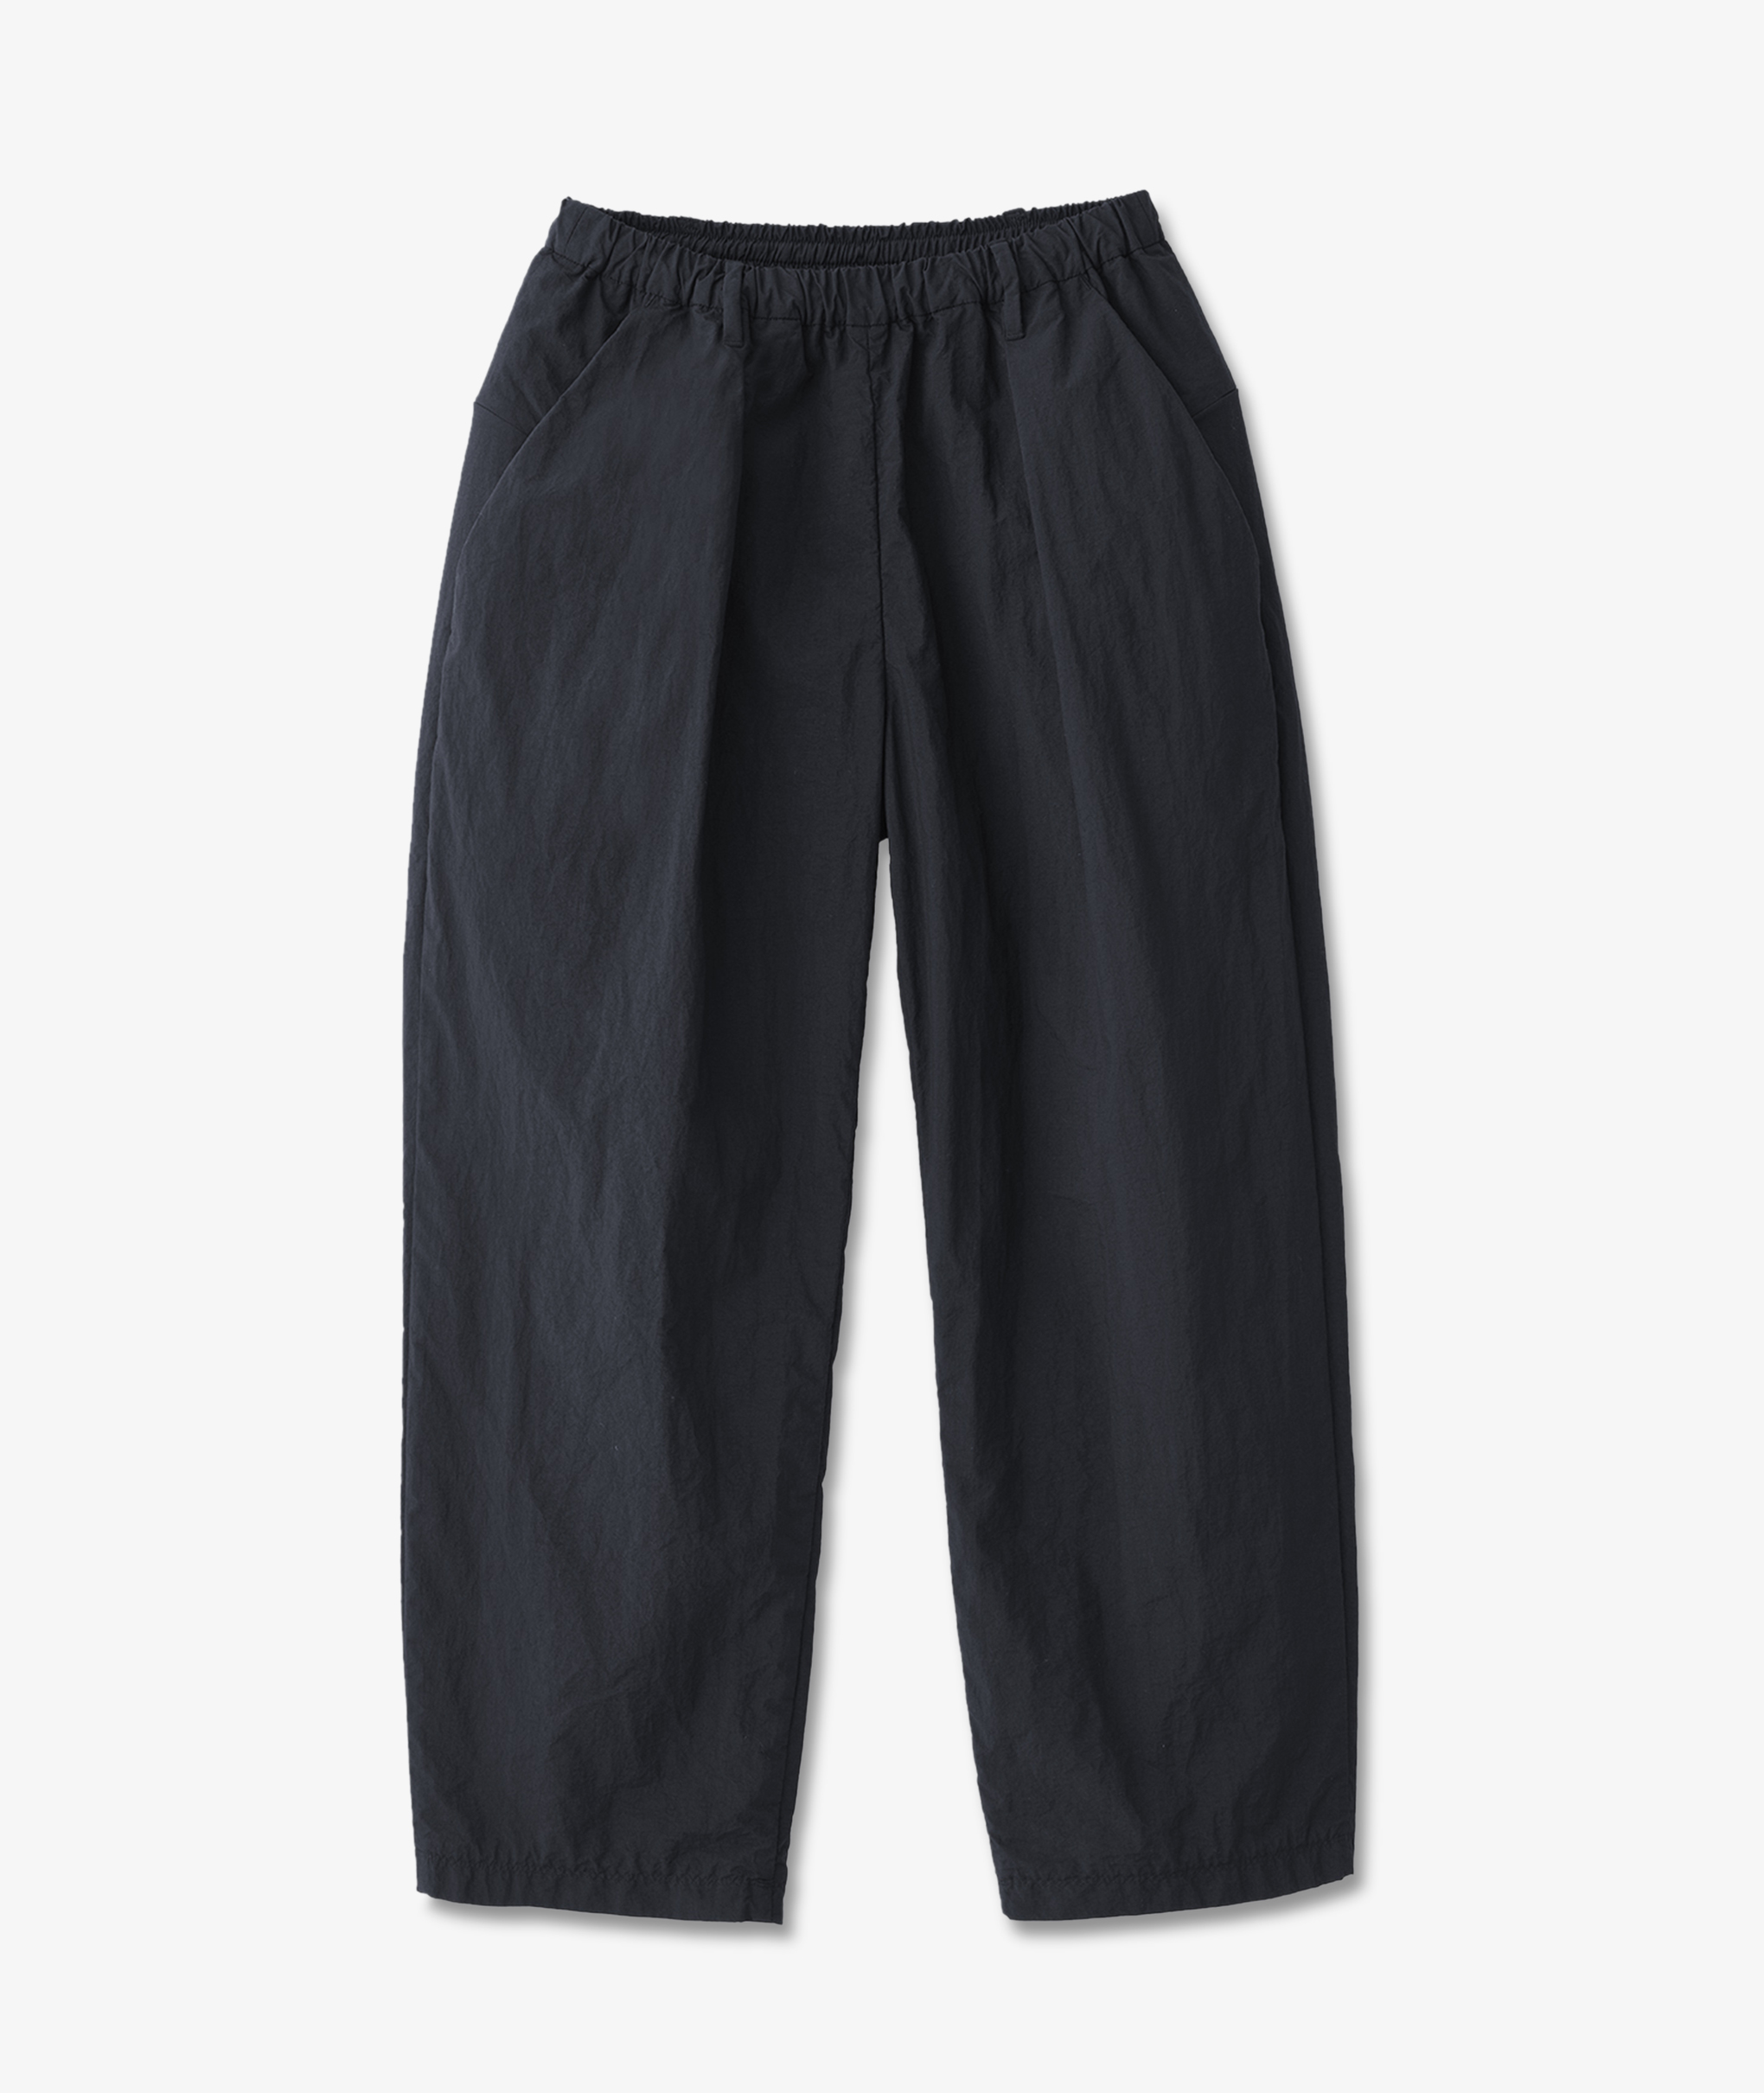 TEATORA】Wallet Pants packable horizon - パンツ